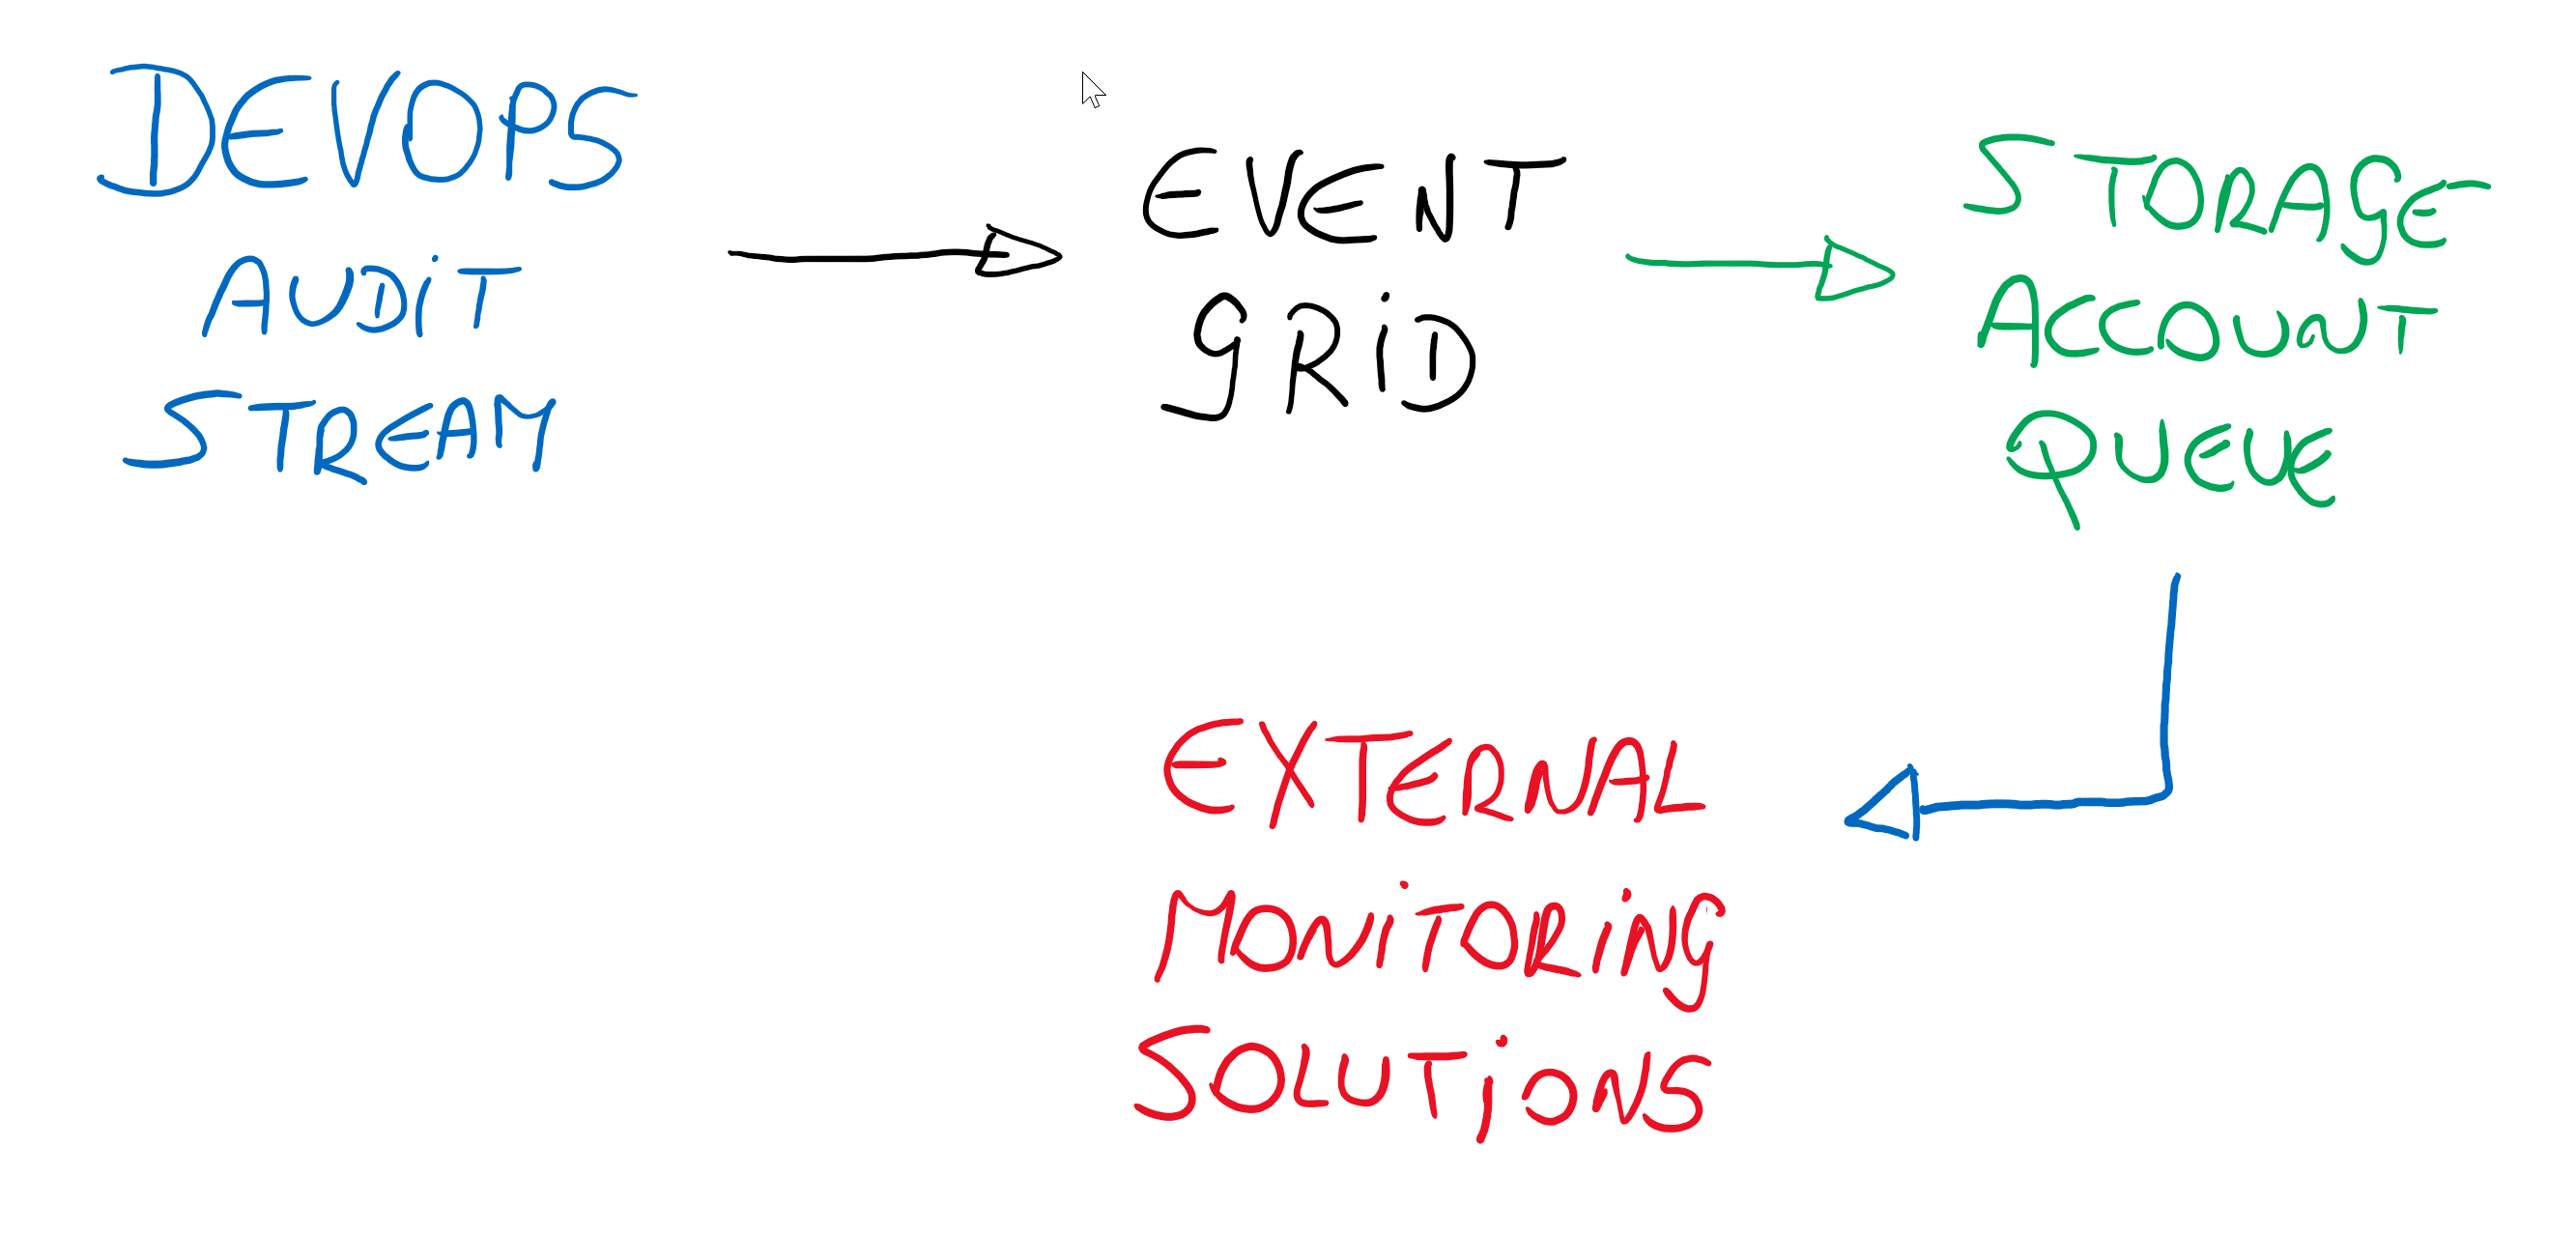 Auditing_Flow_EventGrid